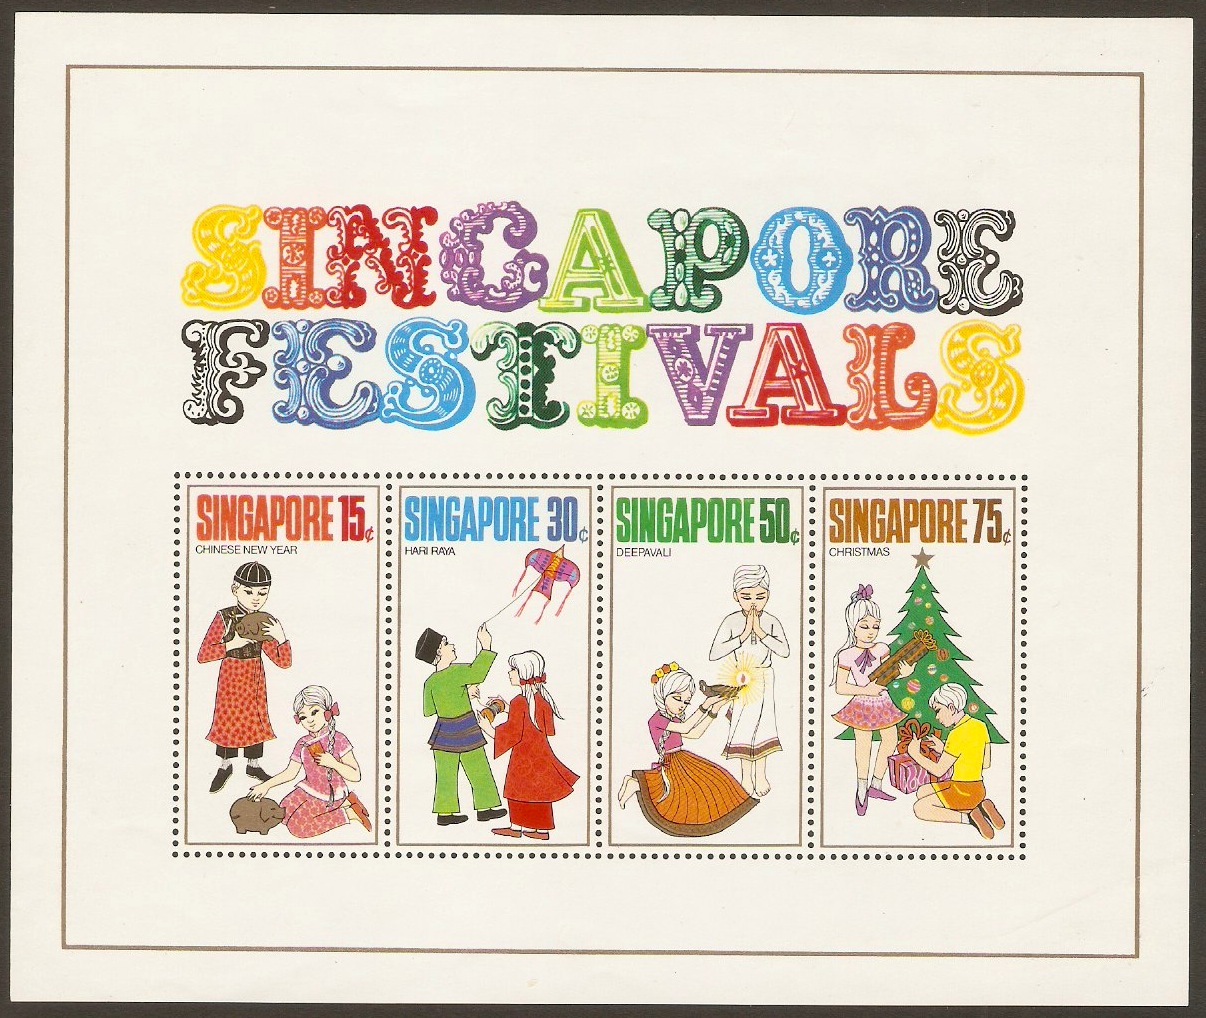 Singapore 1971 Festivals Stamps Sheet. SGMS159.